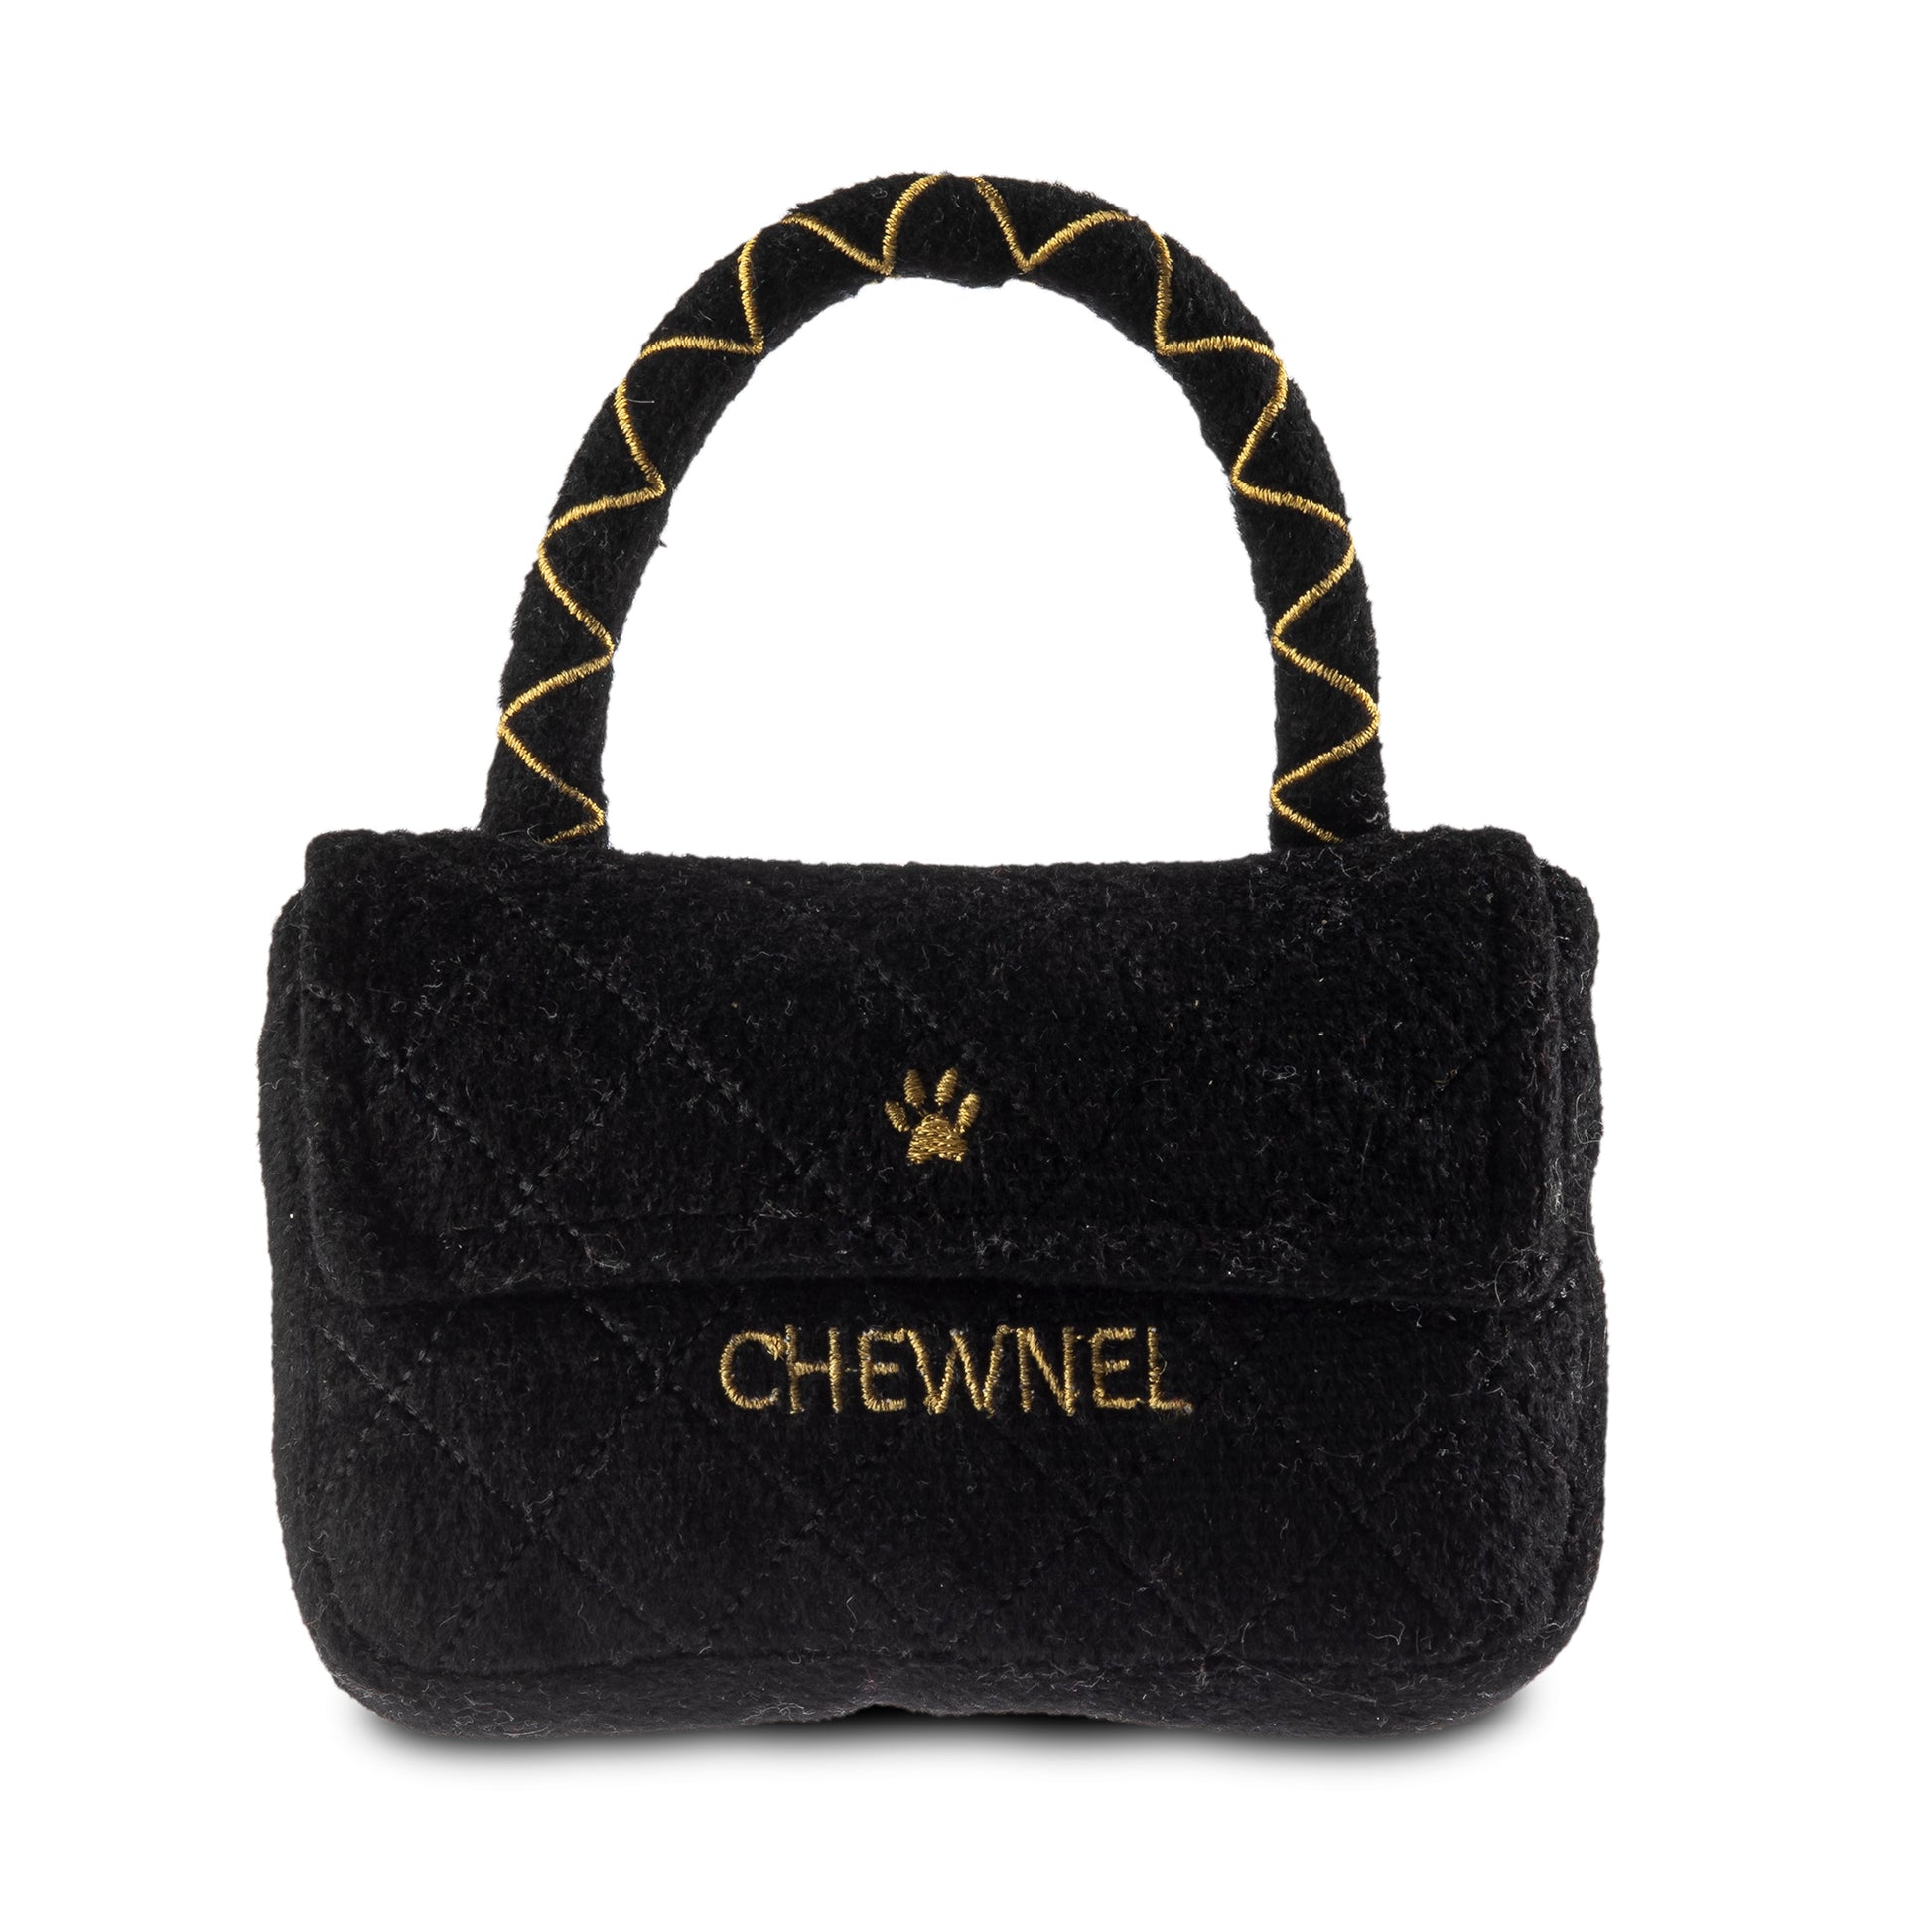 Chewnel Black Handbag Plush Toy